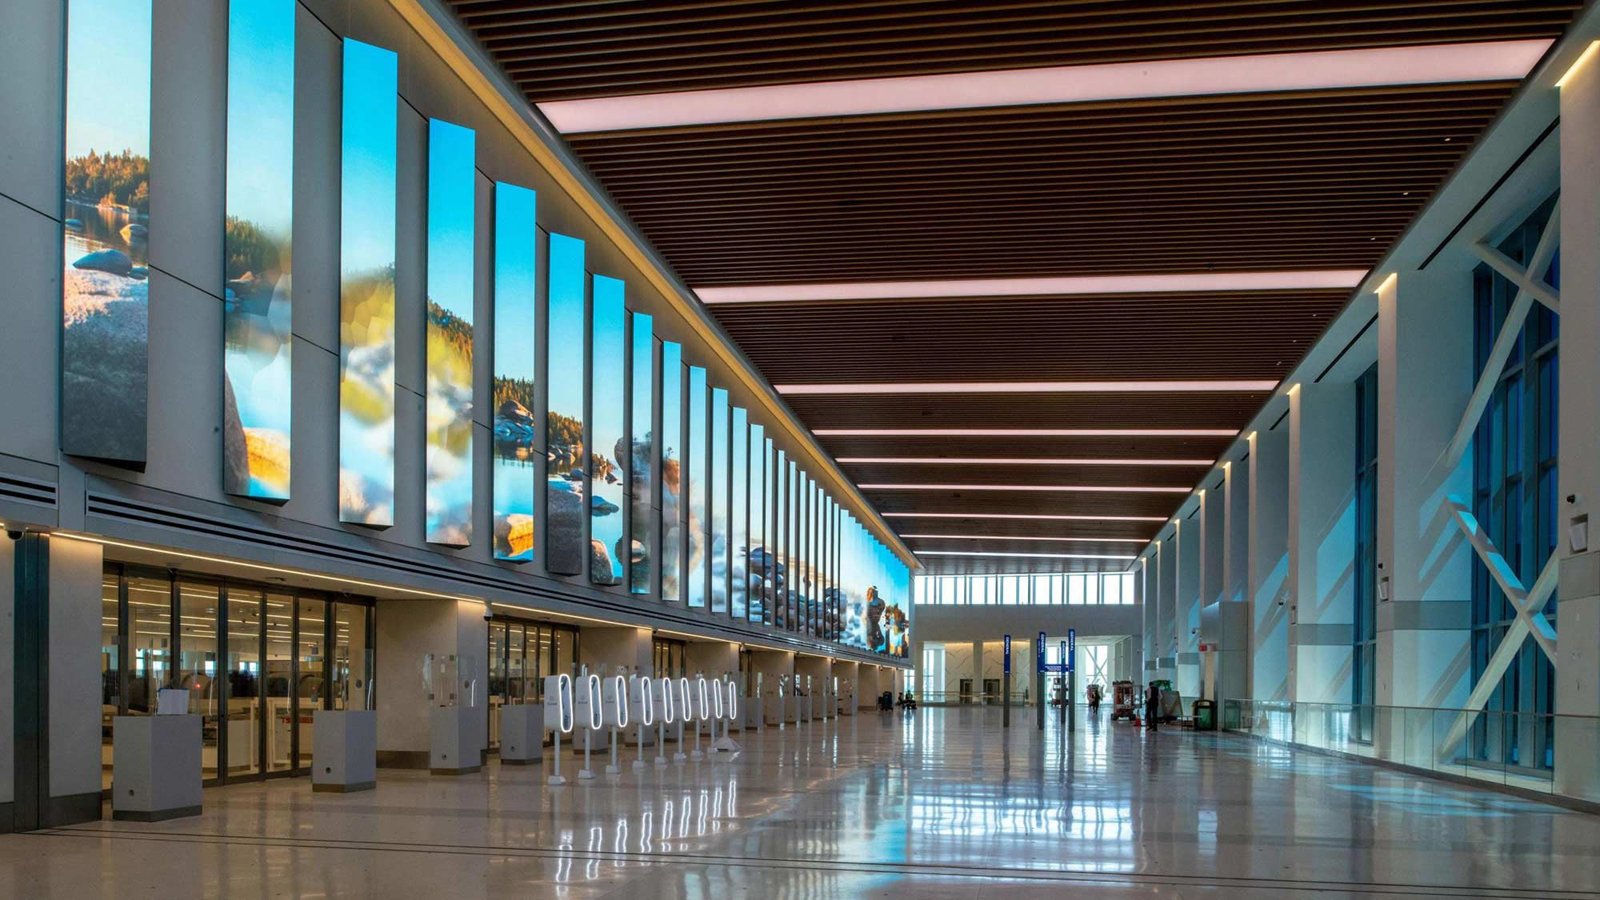 Inside Delta's new Terminal C at LGA